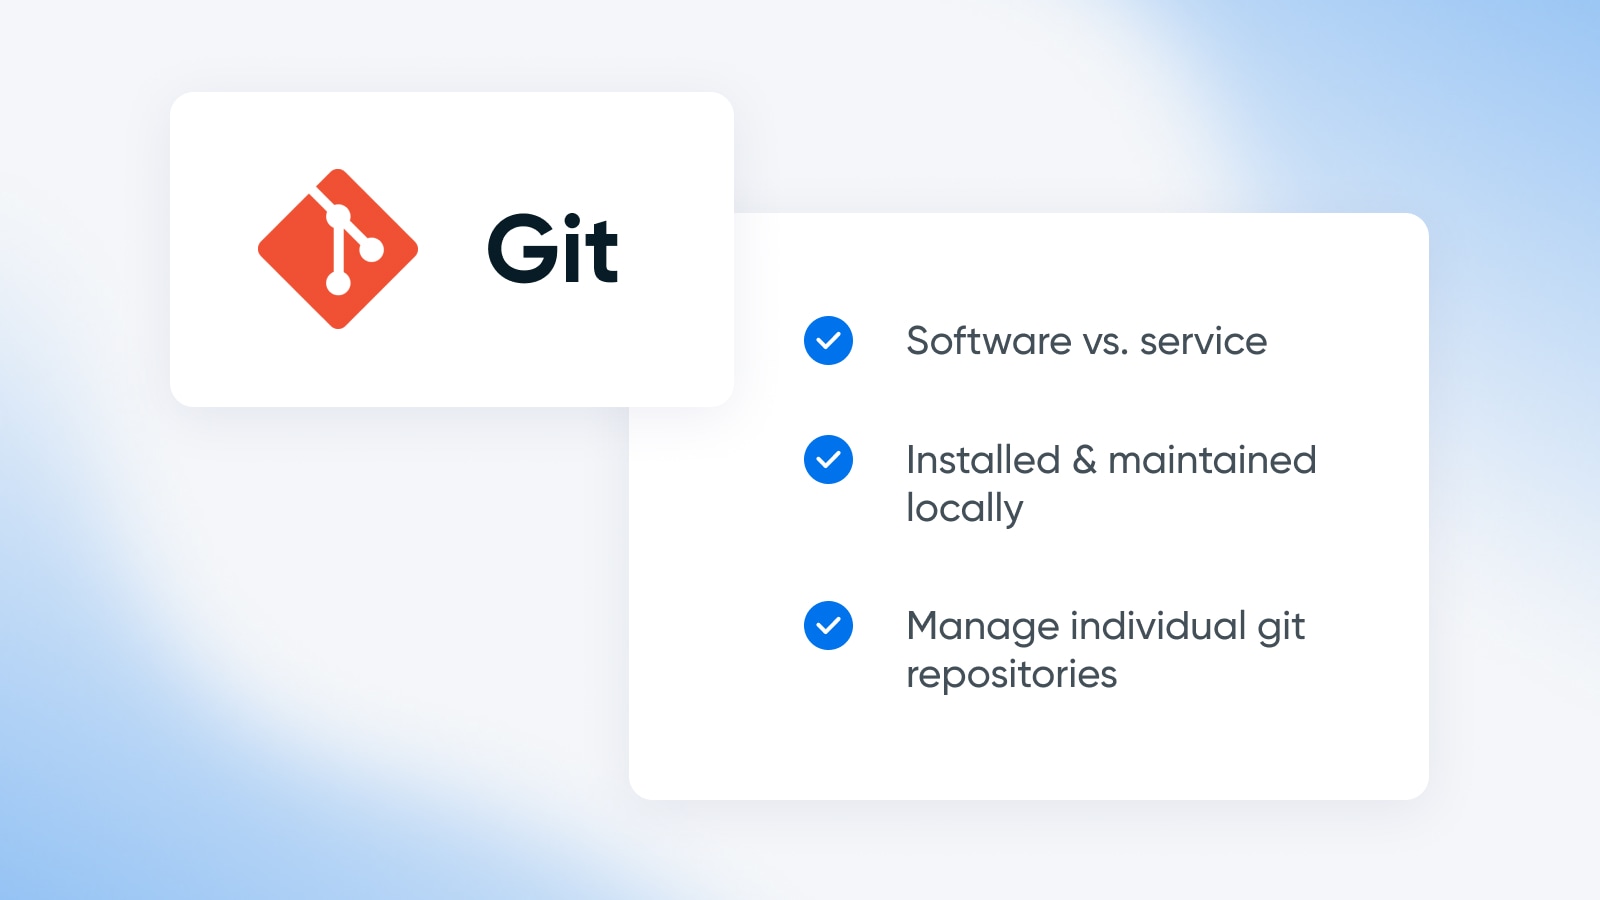 Git is a Source Code Management (SCM) platform